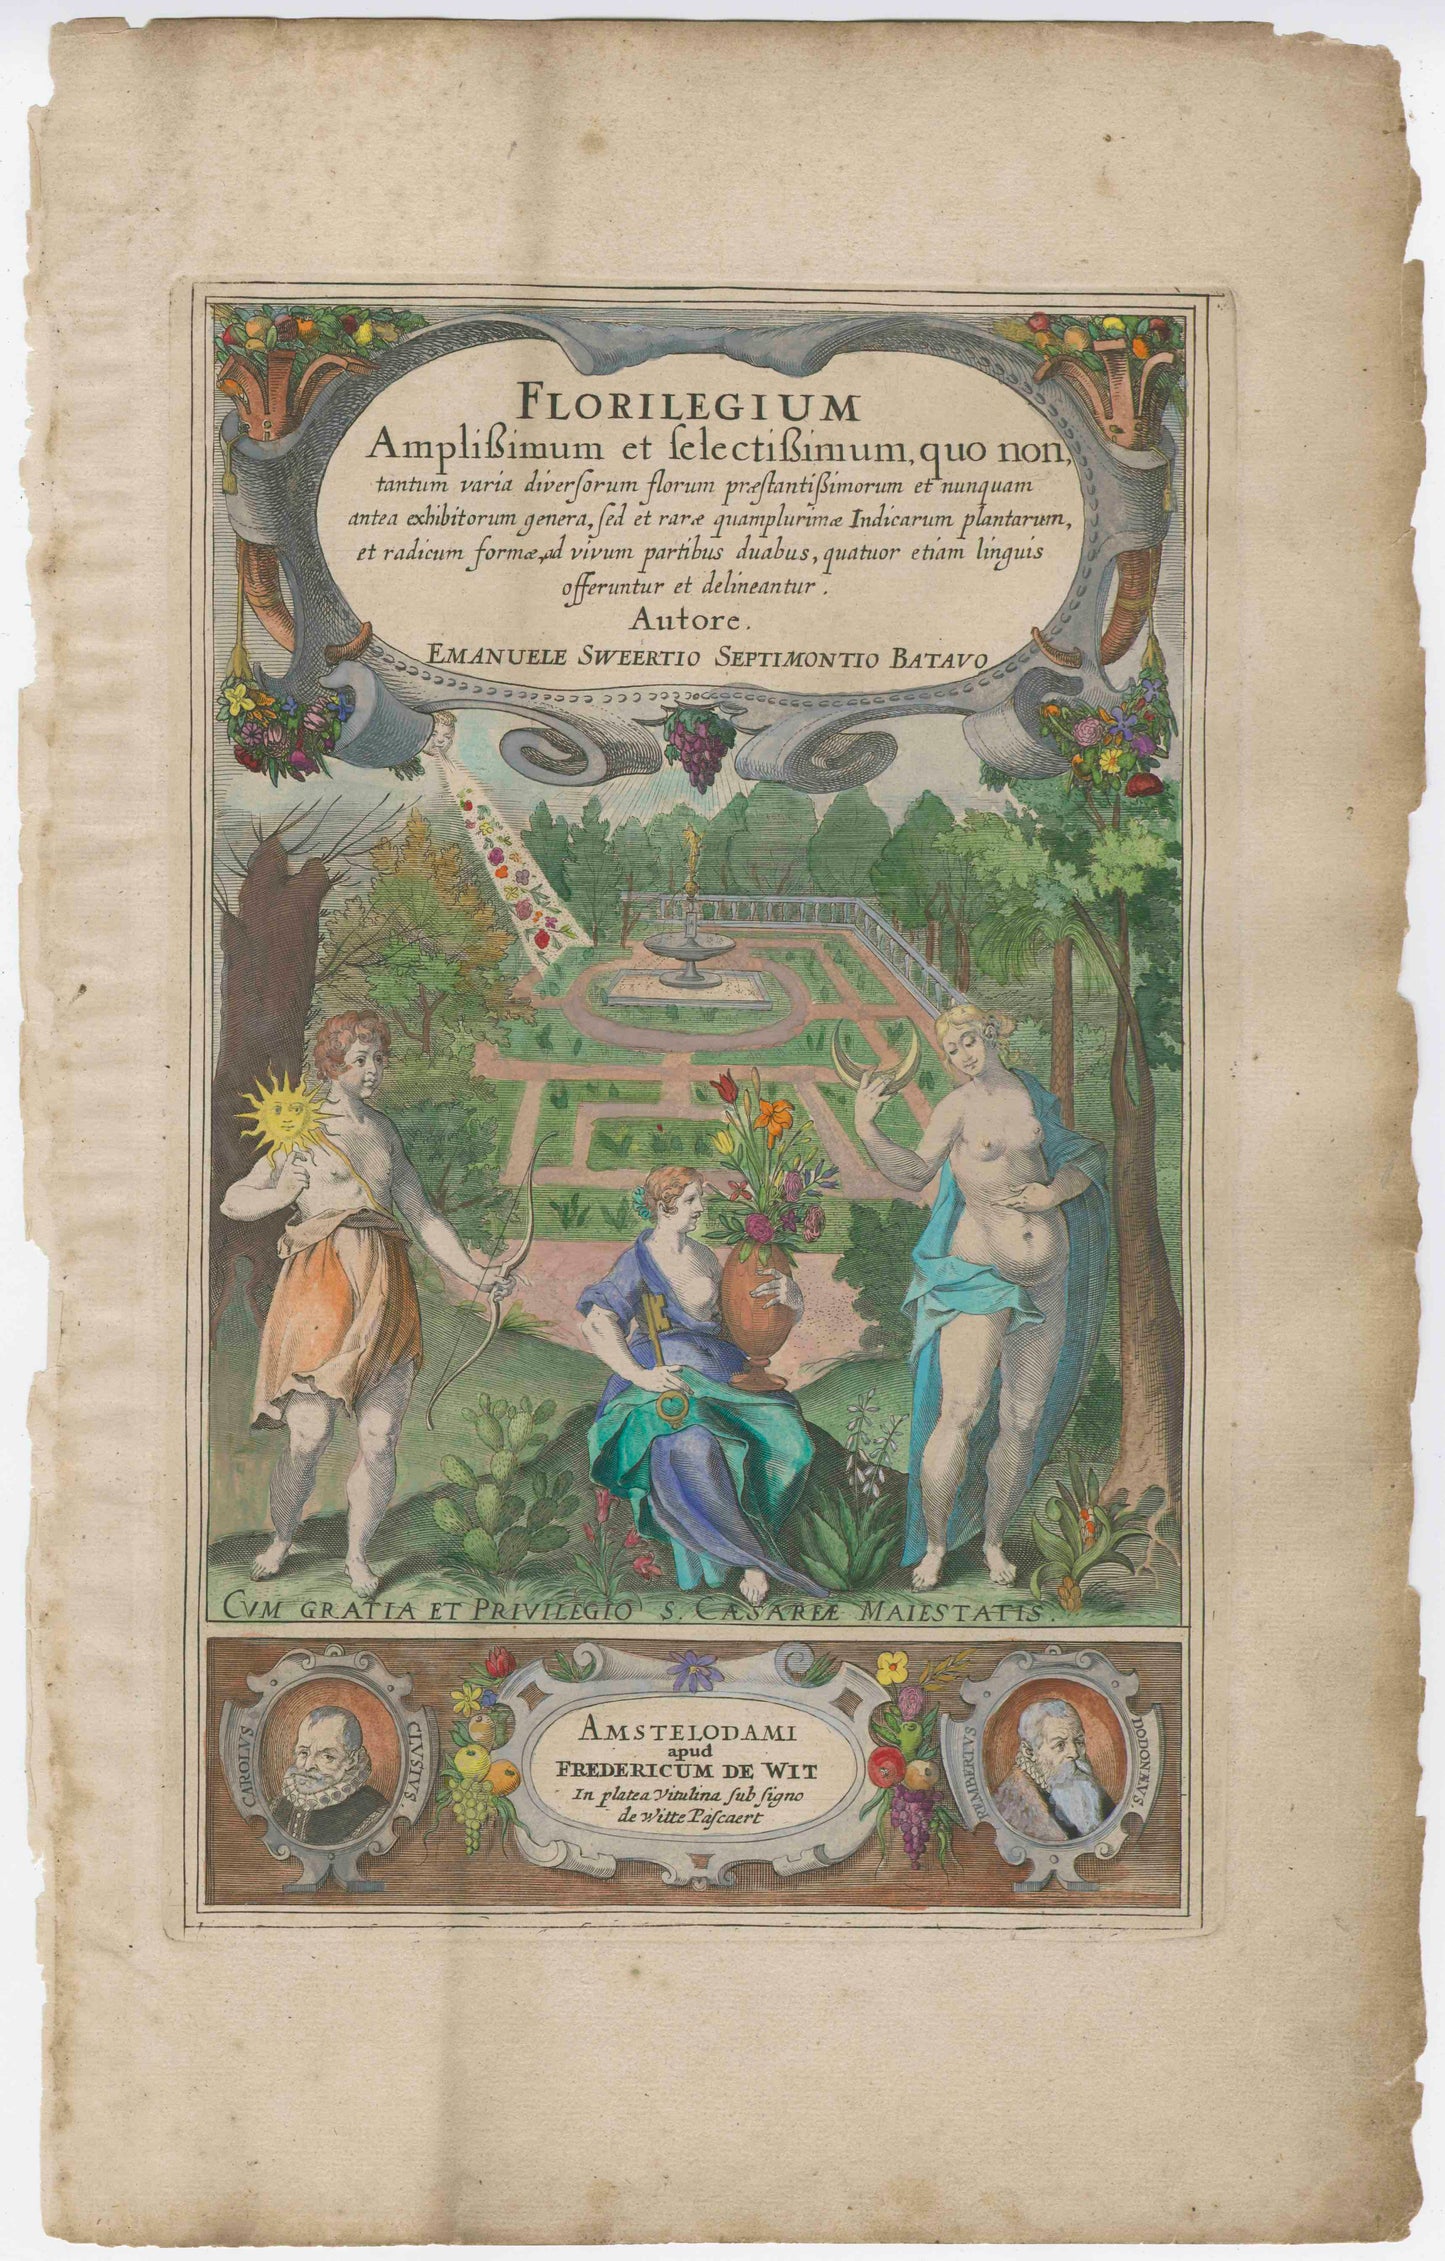 Emanuele Sweerts 17th Century "Florilegium" Print - Plate 67